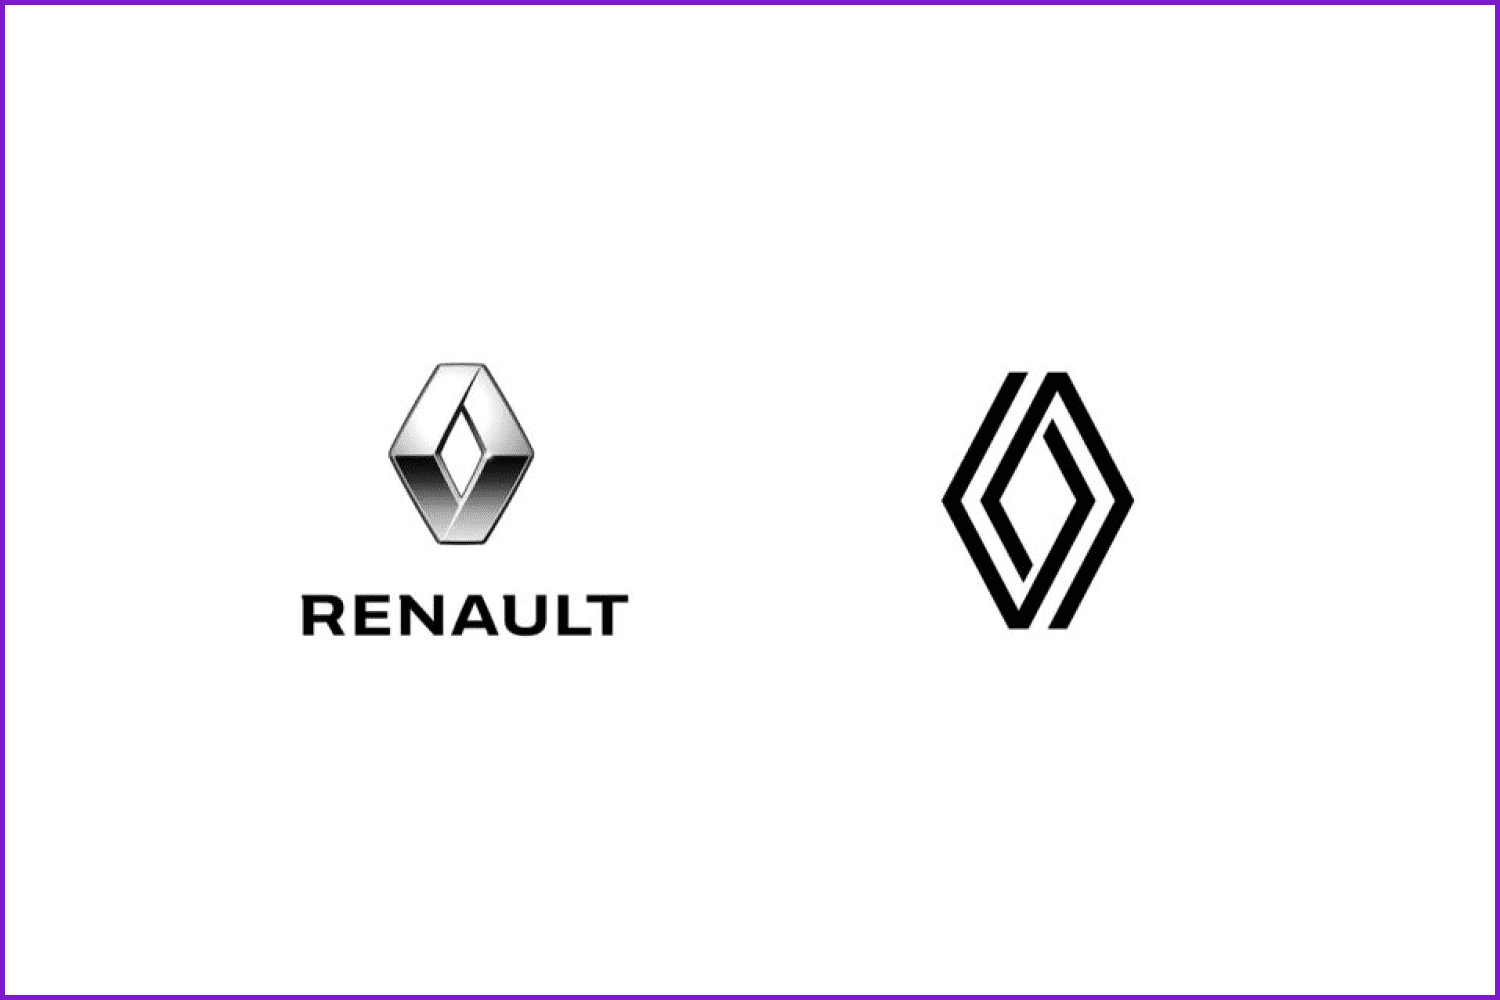 Renault logotype variants.